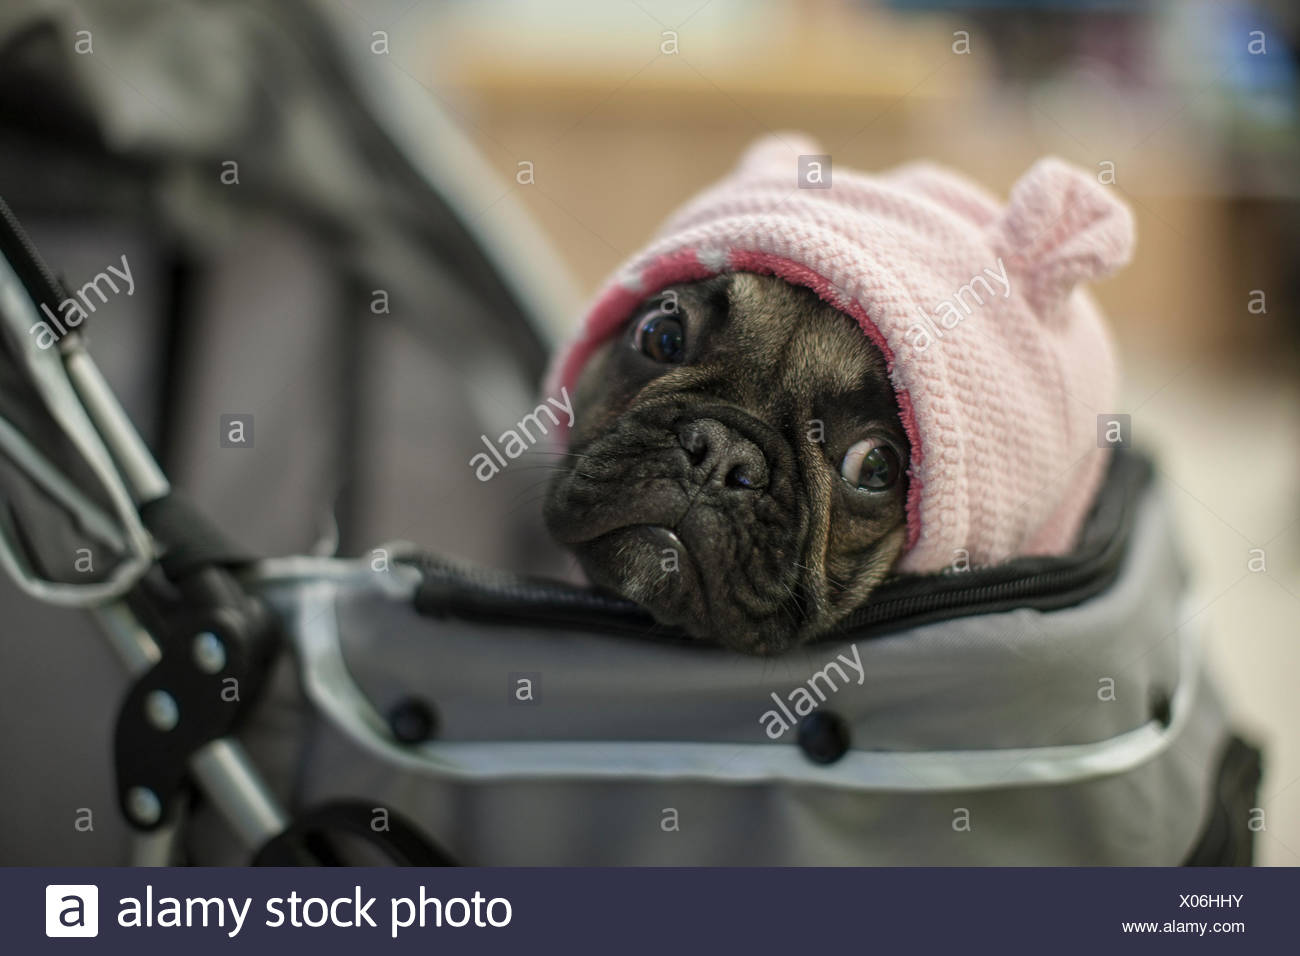 french bulldog in stroller